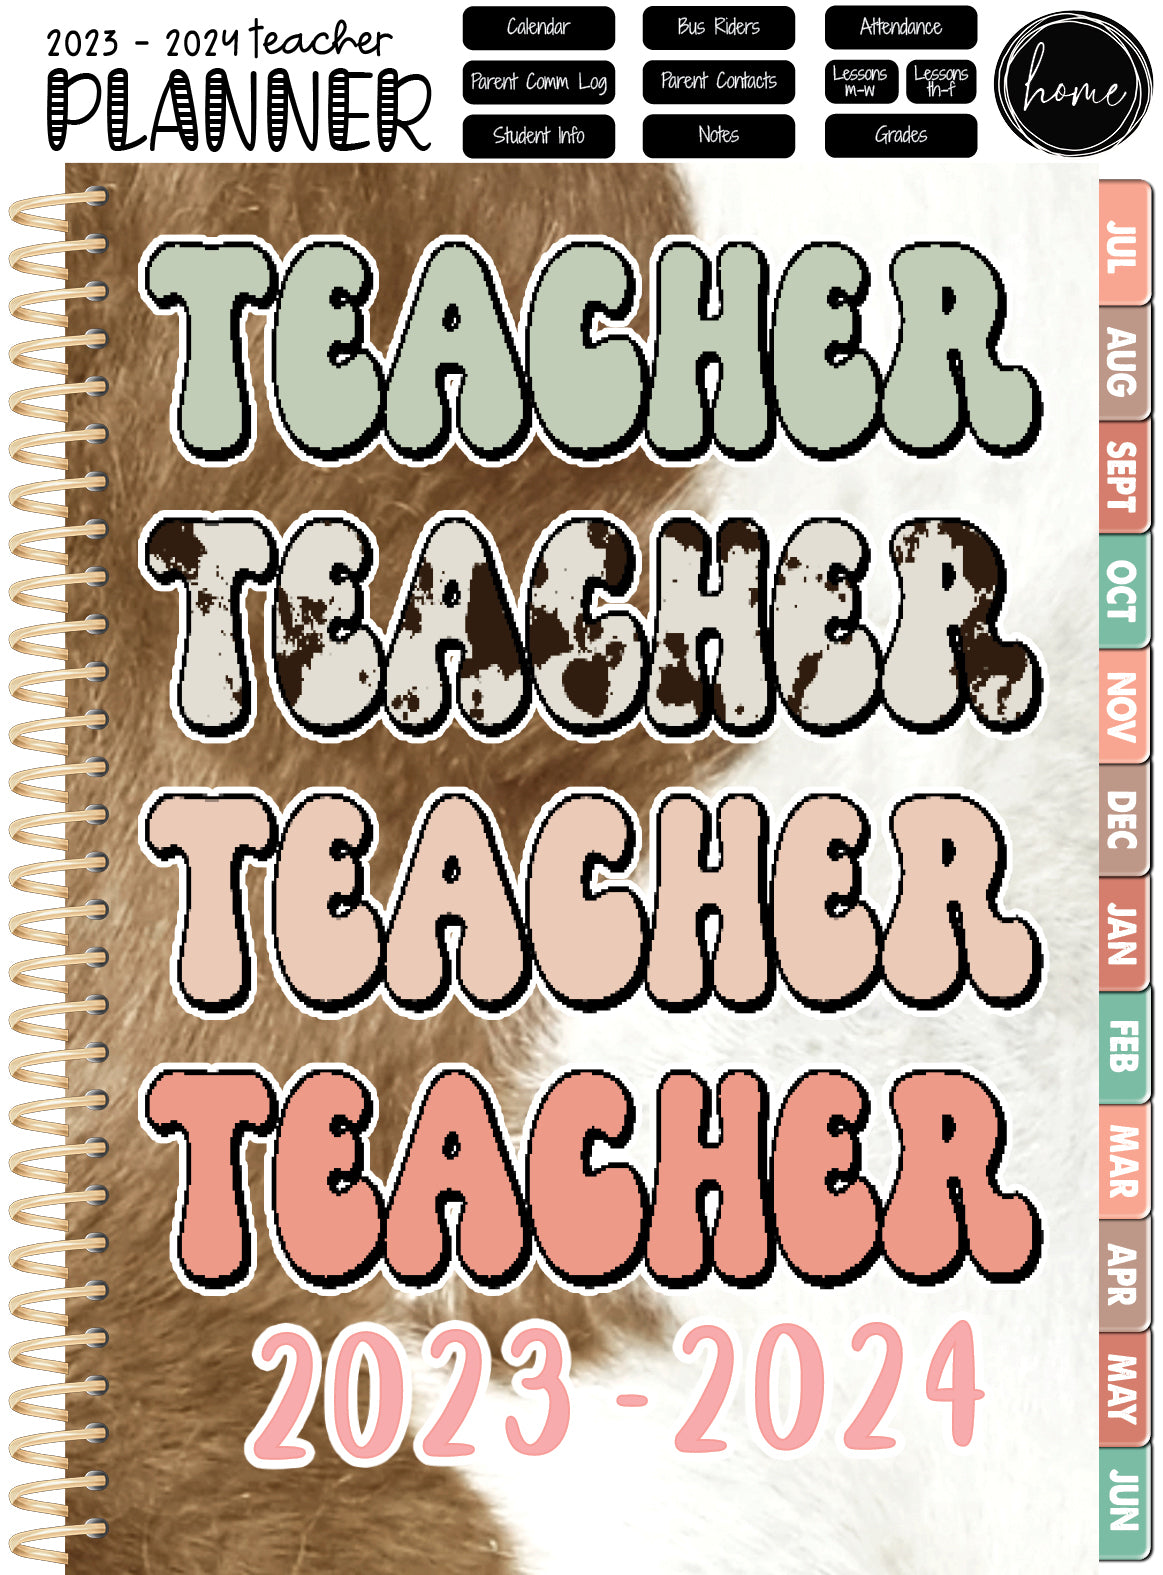 2023 2024 Digital Teacher Page Bundle - COWHIDE TEACHER